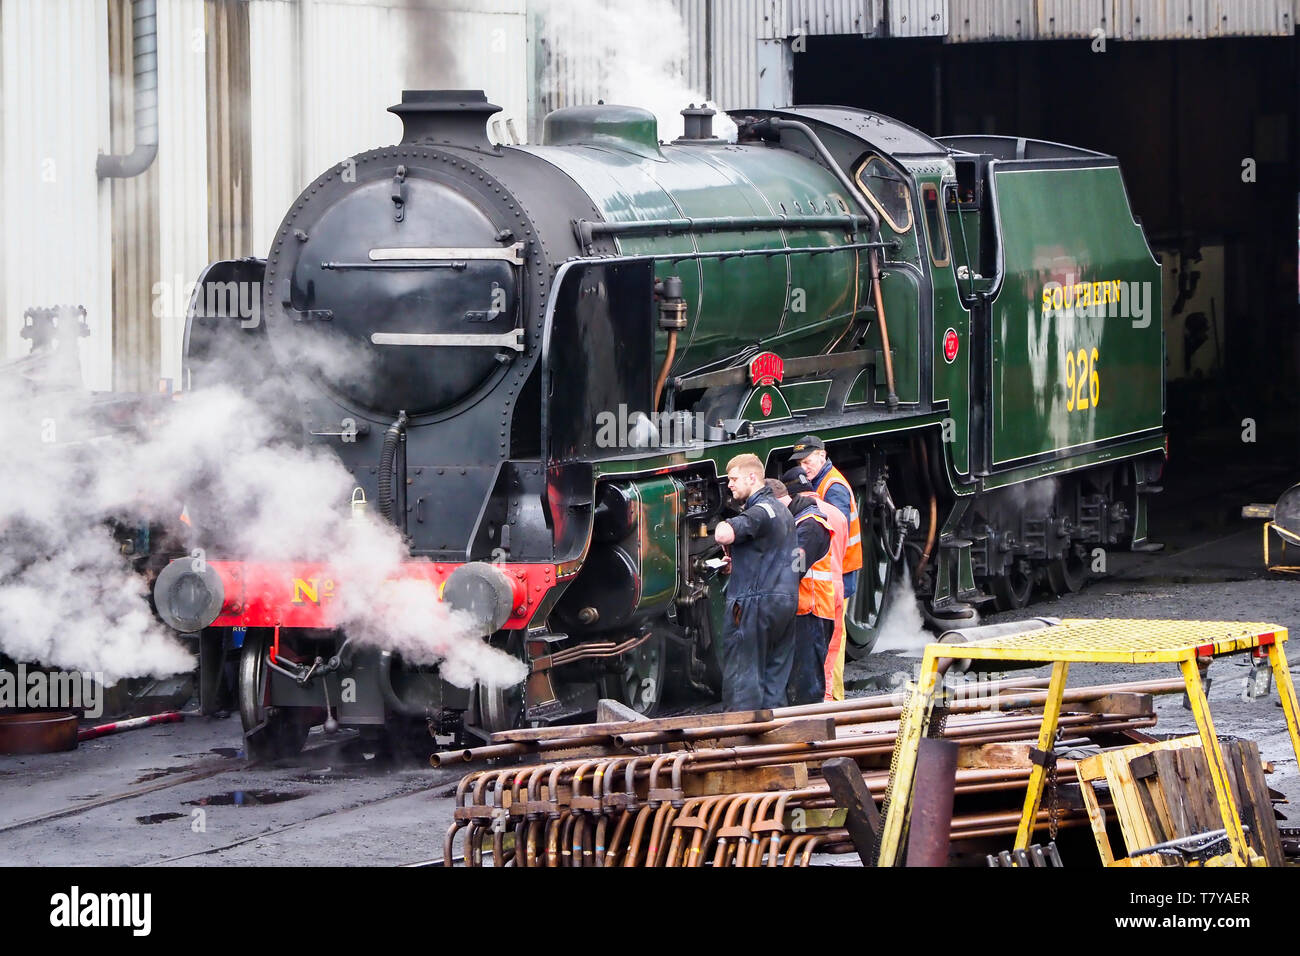 SR No. 926 “Repton“ at Grosmont being preparedNorth Yorkshire Moors Railway Stock Photo